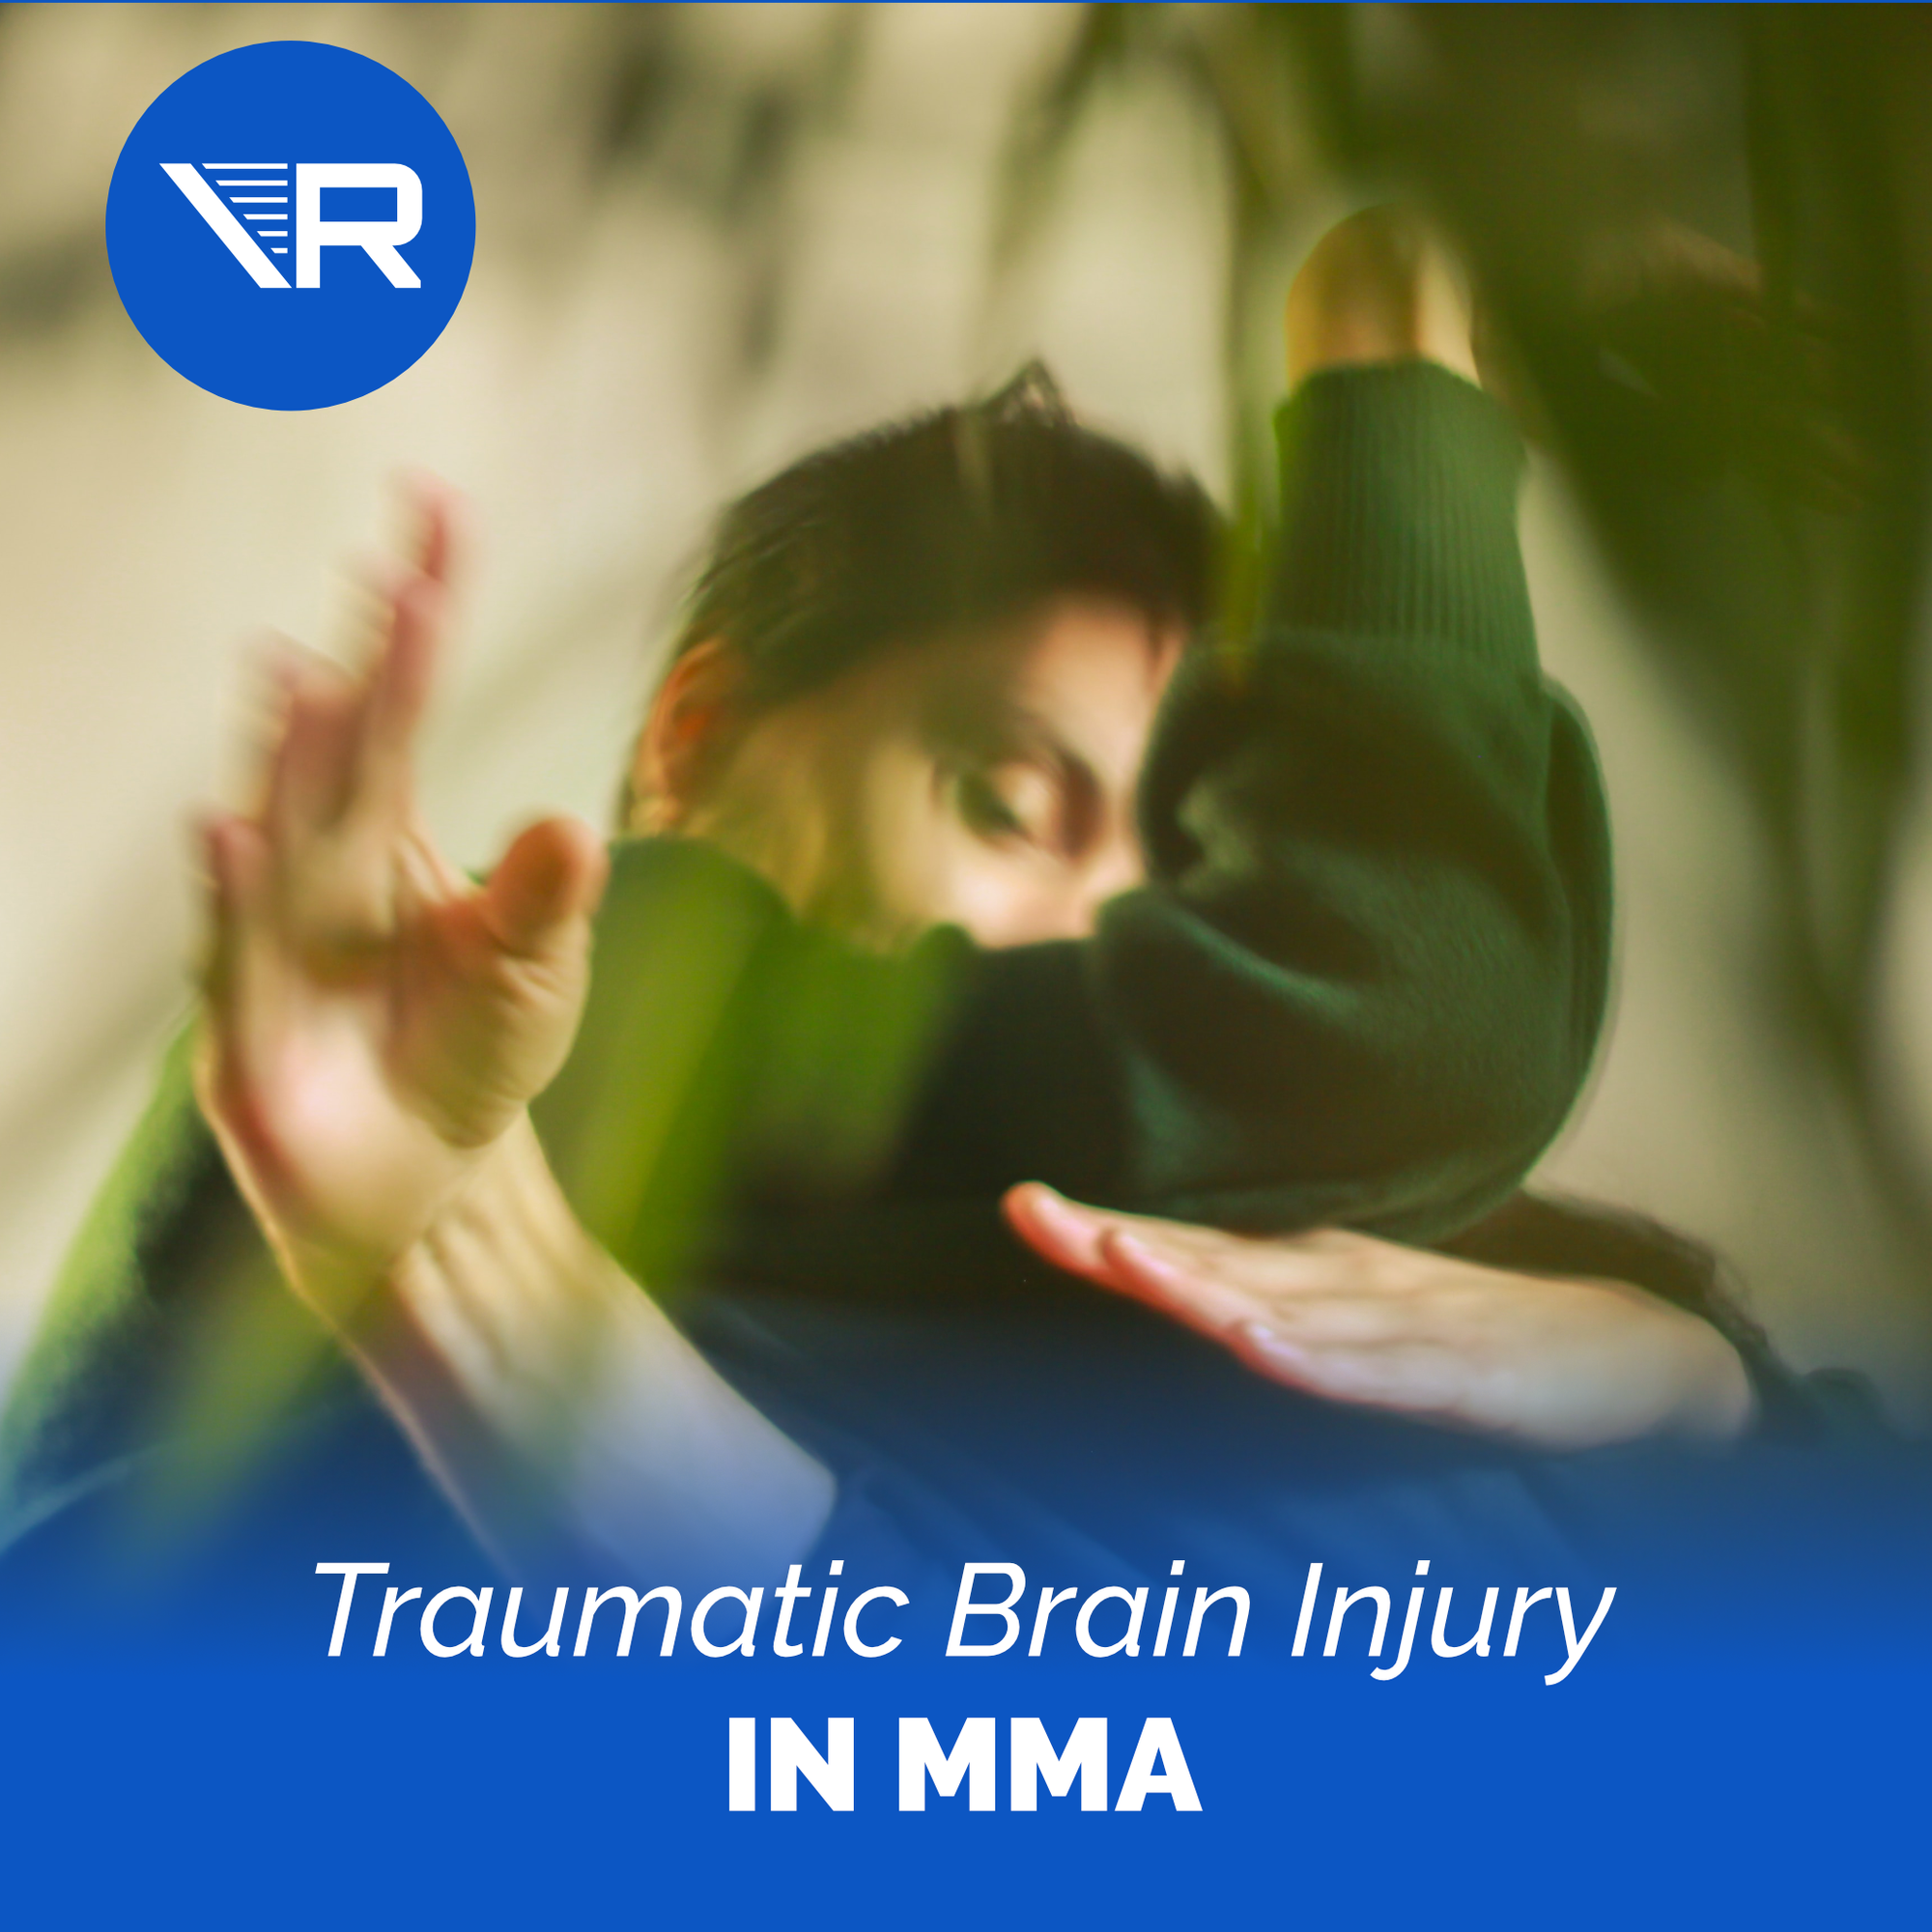 The Brain Trauma Issue In MMA